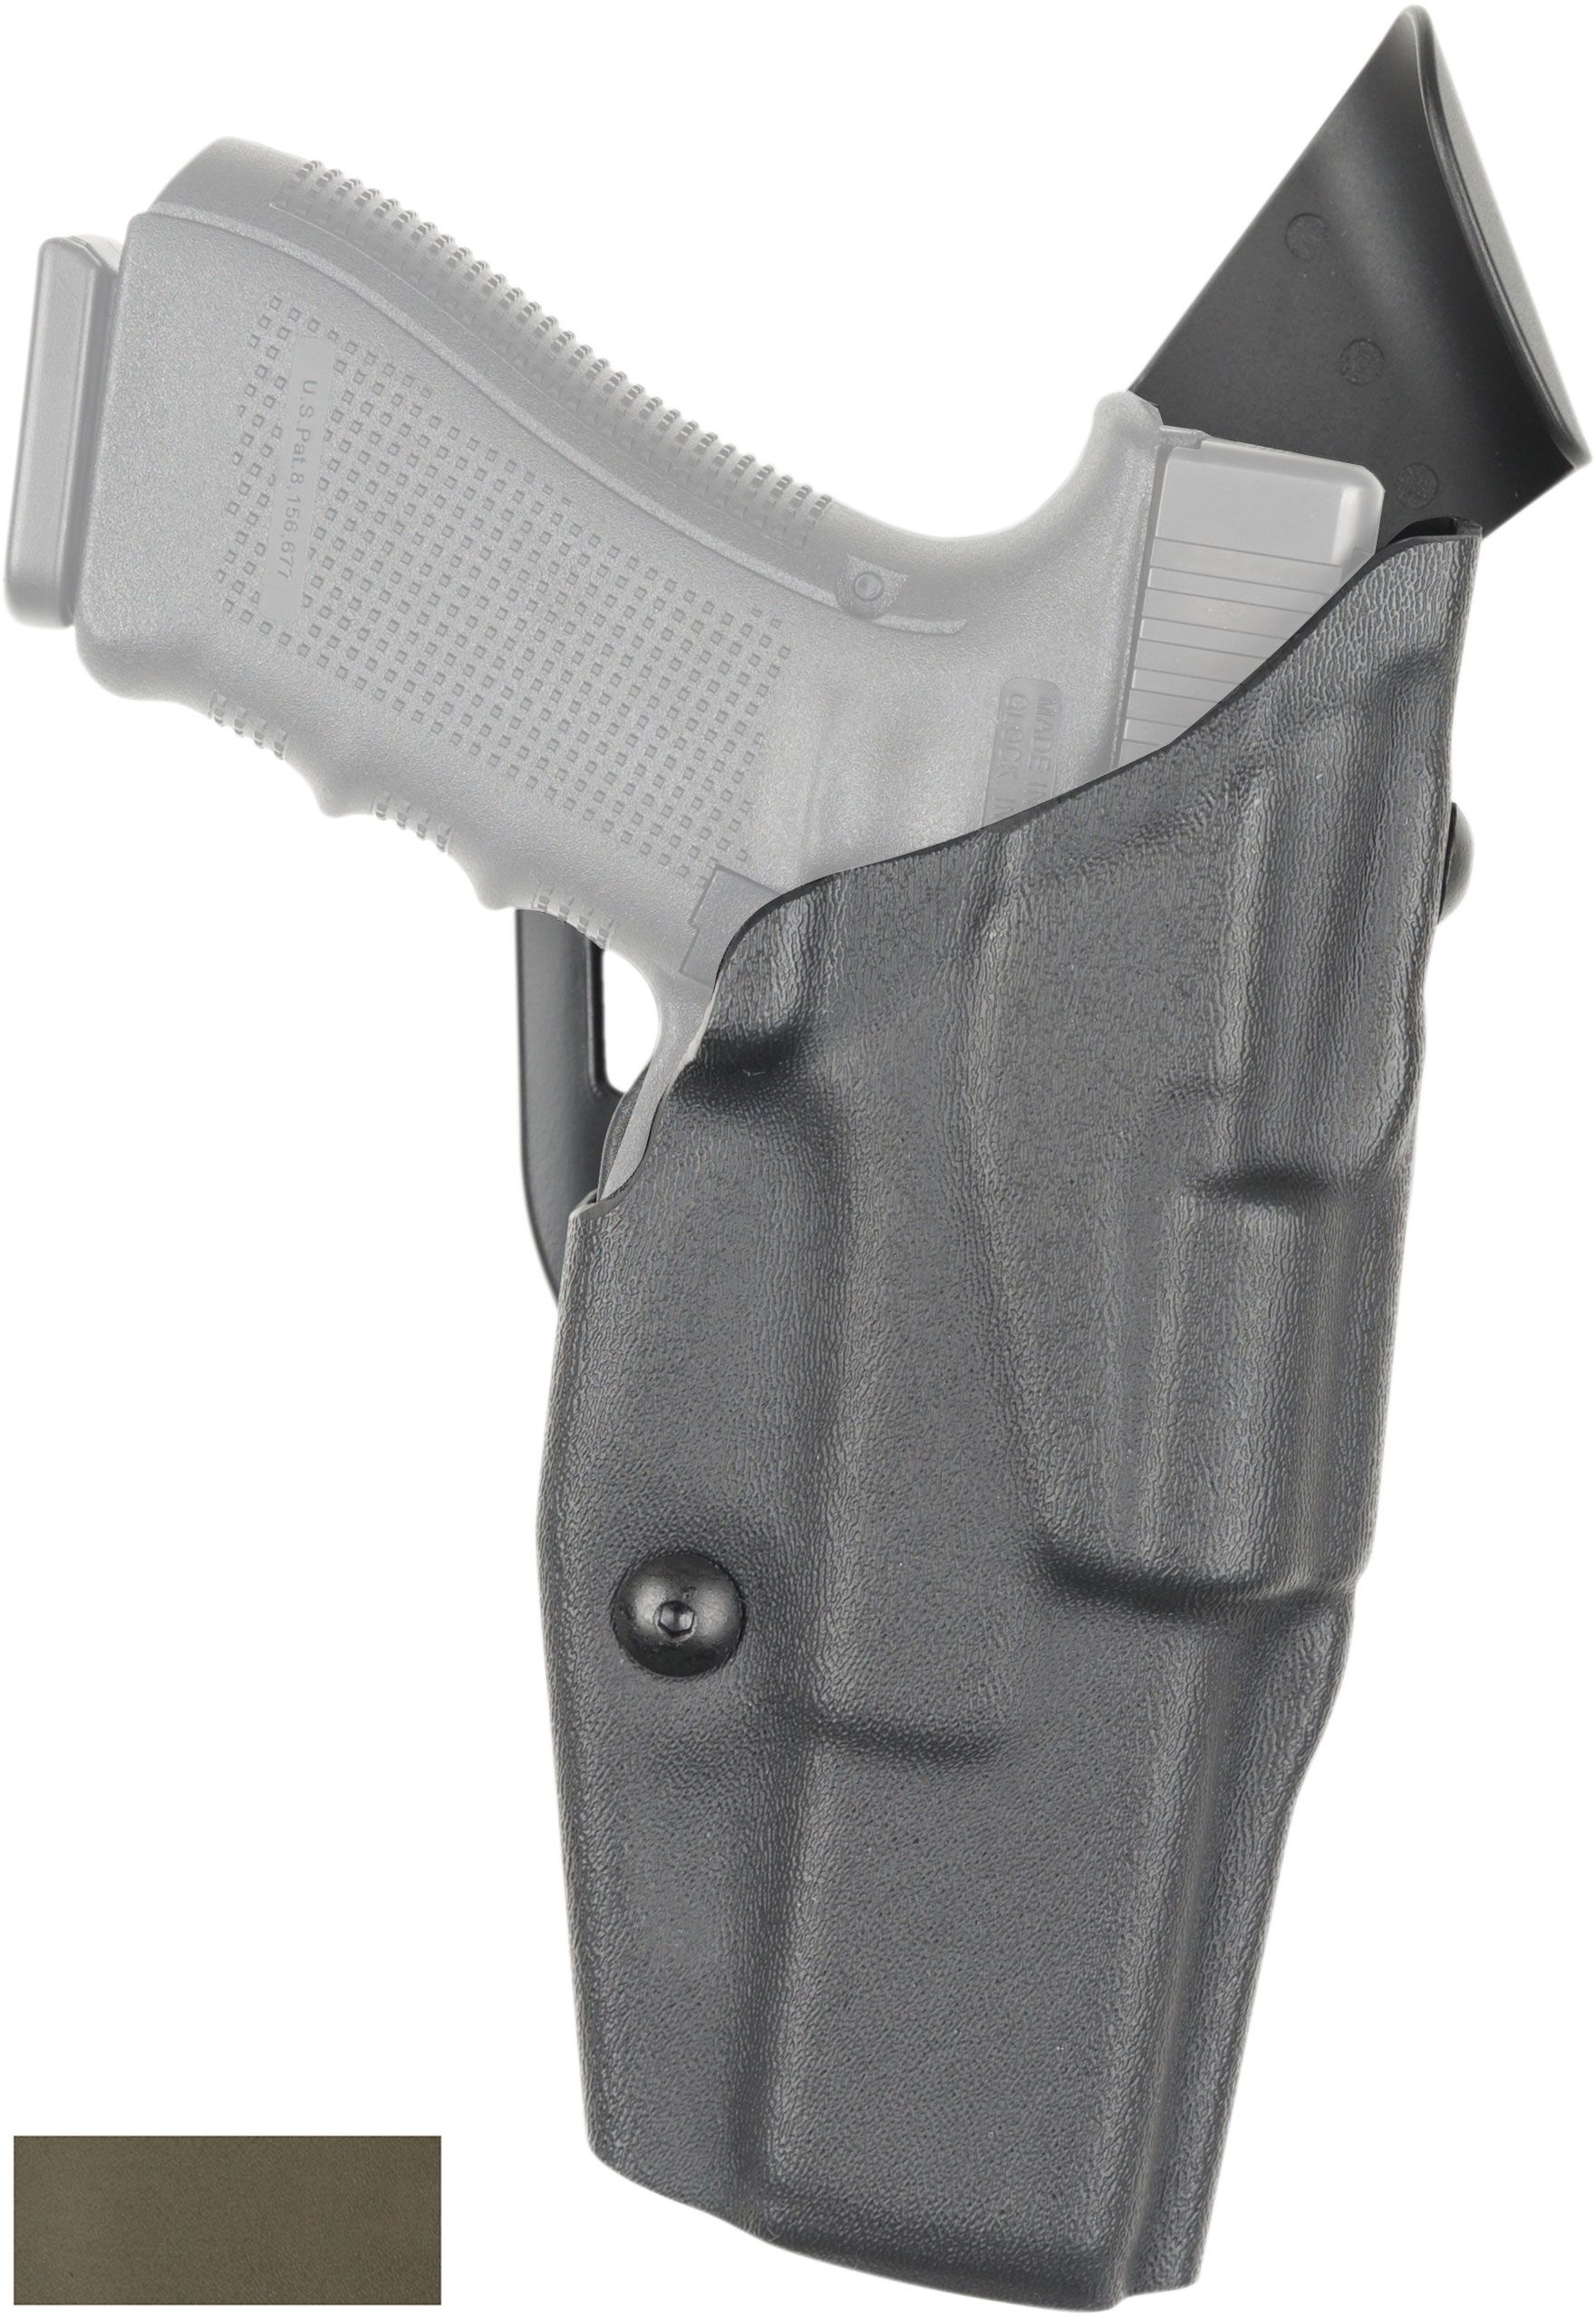 Safariland Model 6390 ALS Mid-Ride Level-I Duty Glock Holster : 6390-3832-541